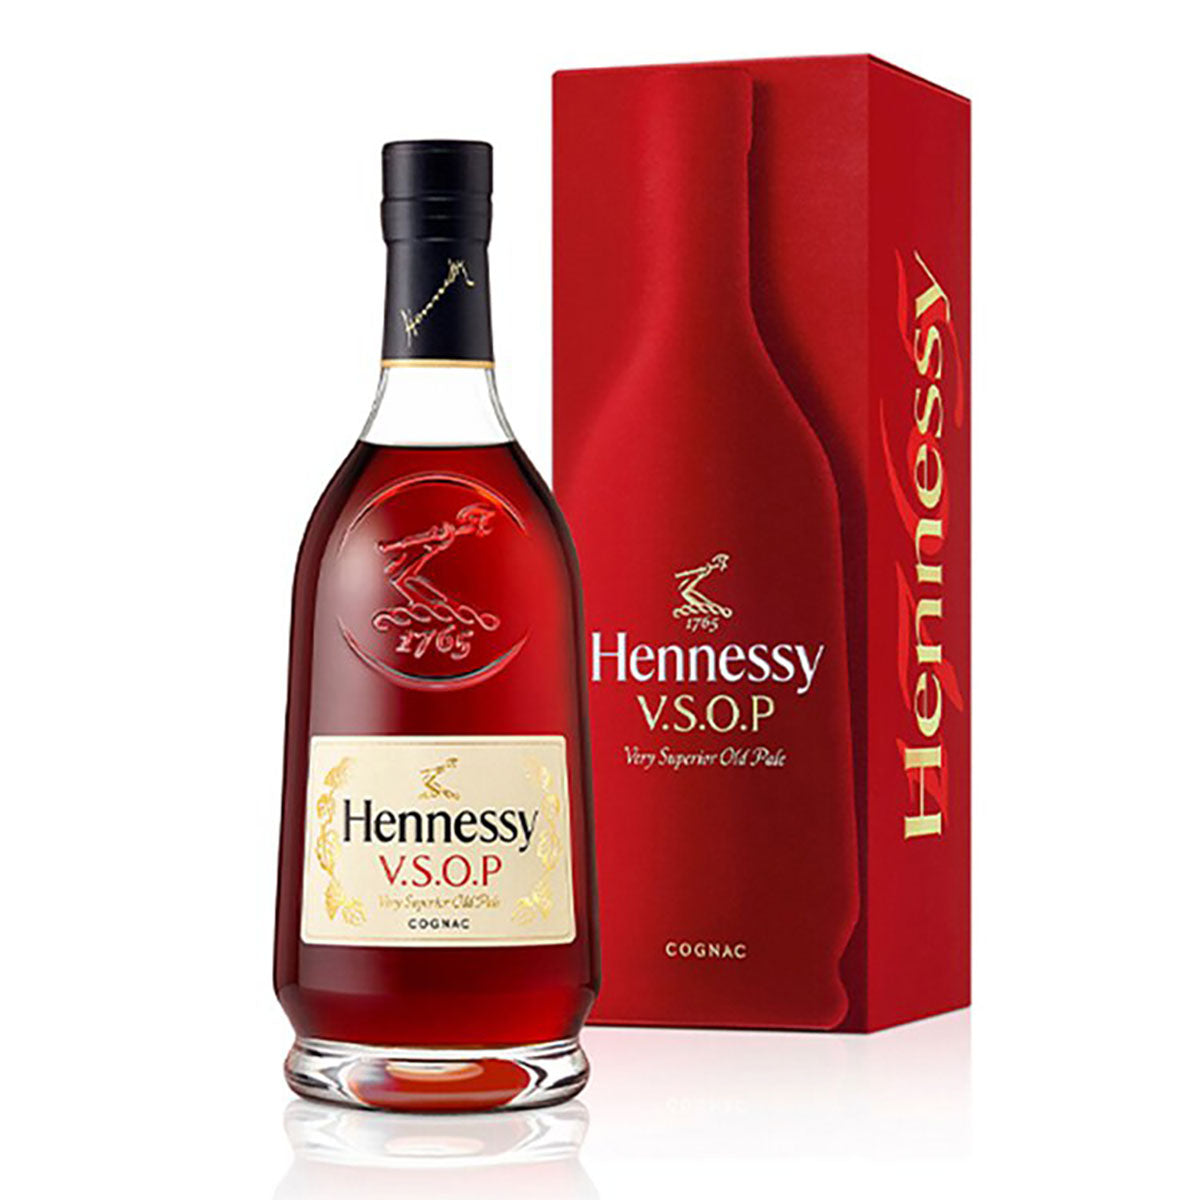 Hennessy V.S.O.P with Gift Box 軒尼詩V S O P禮盒裝